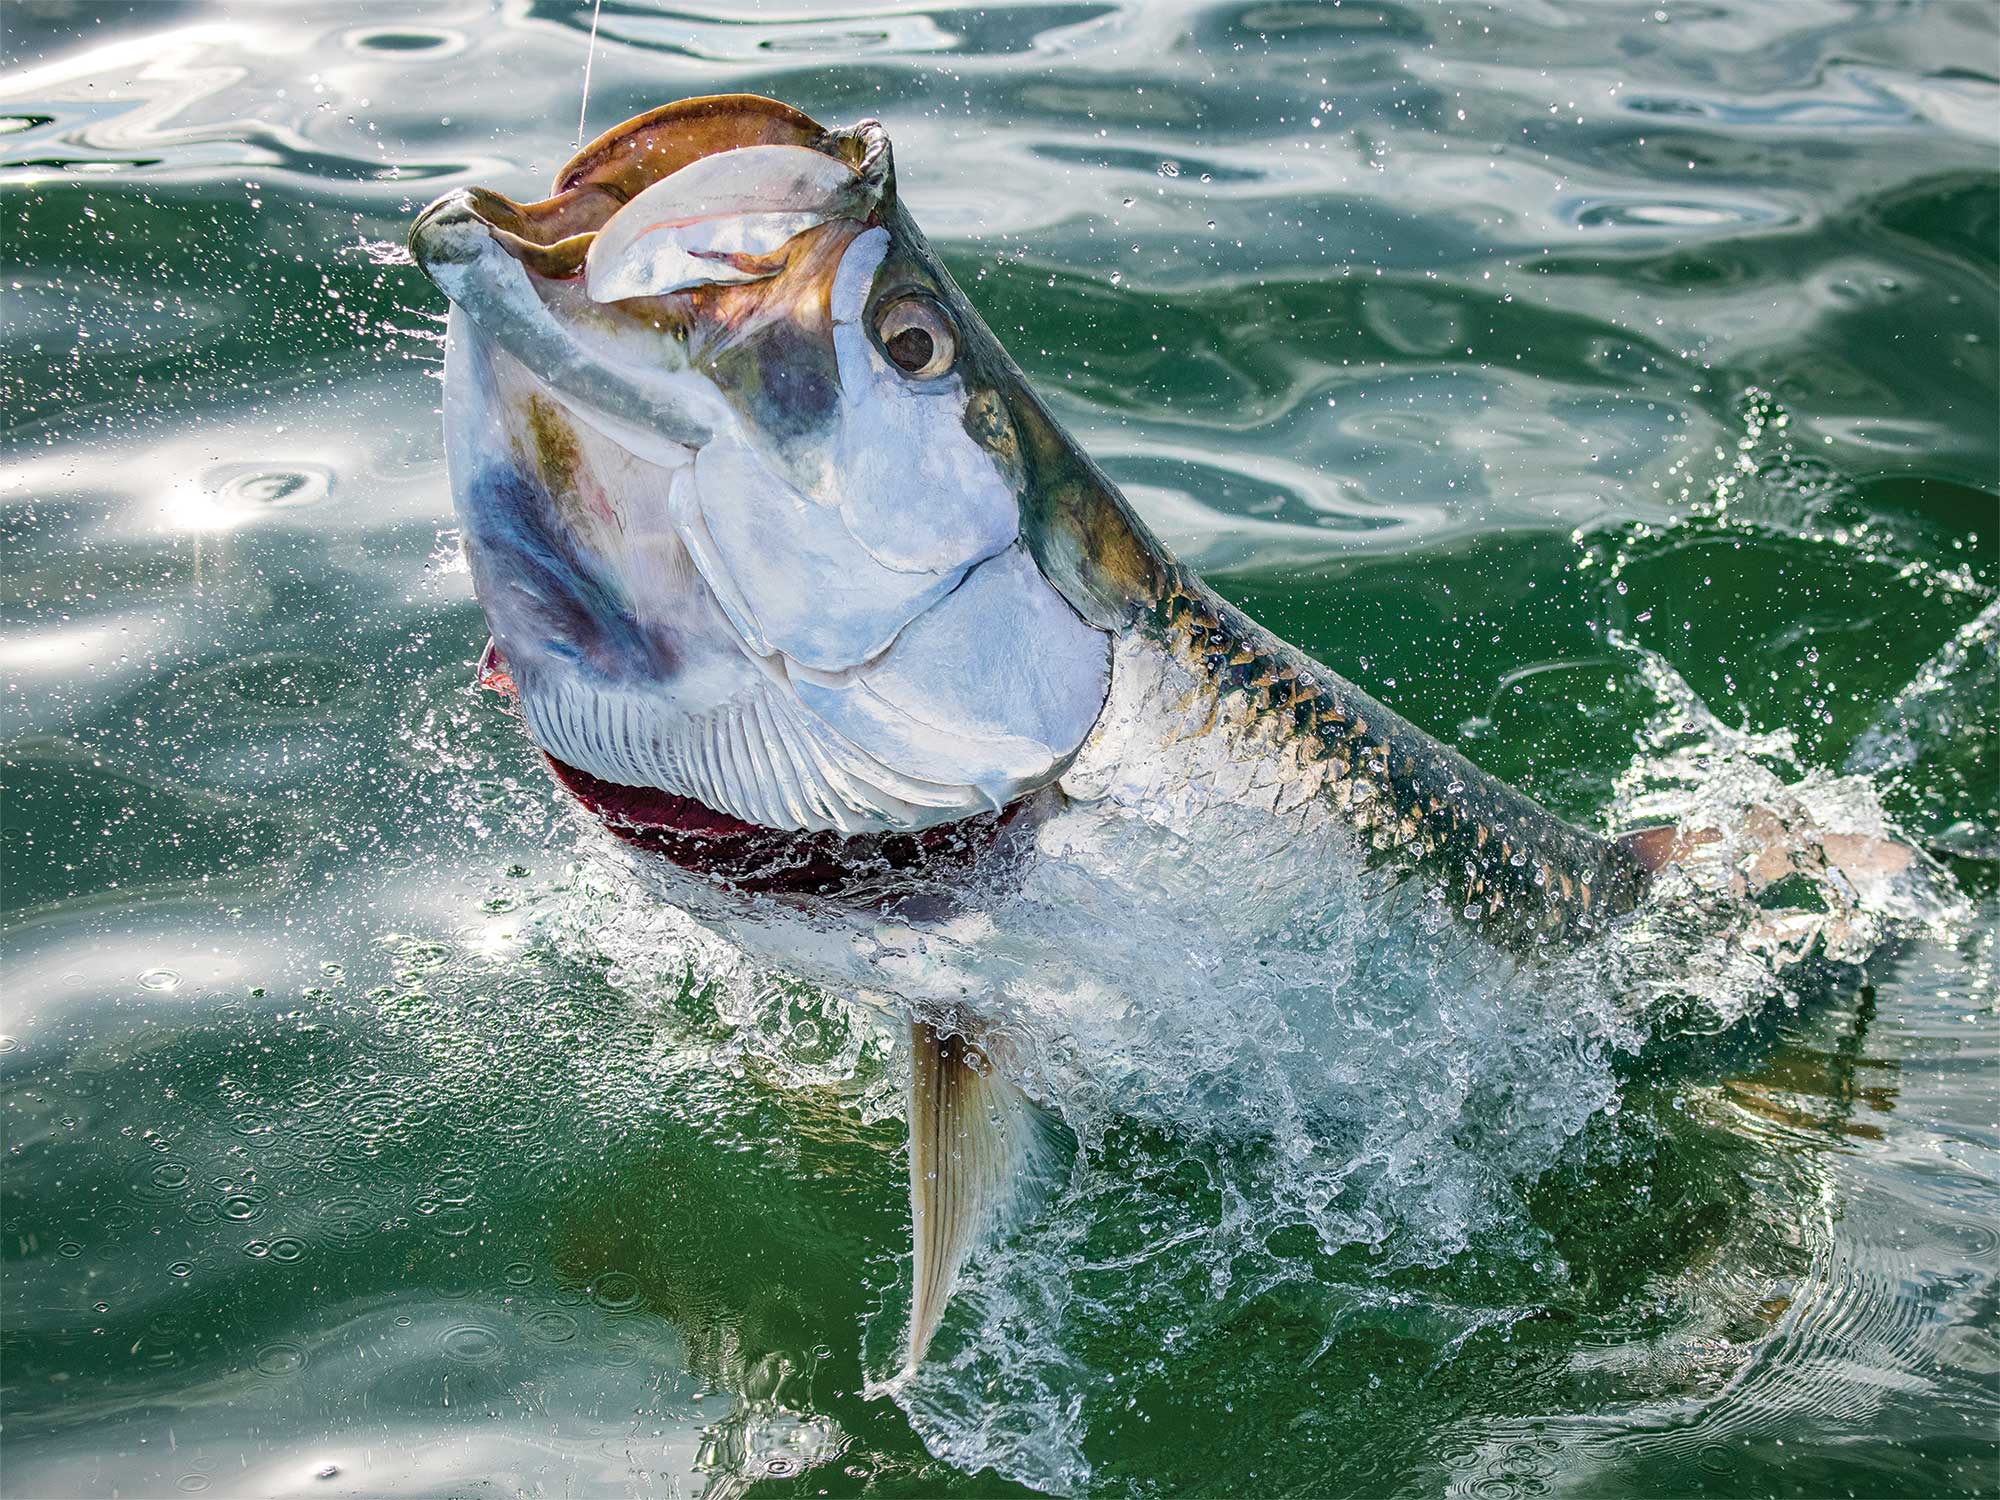 Top 3 Swimbait Tips For Tarpon Fishing - The Intrepid Angler